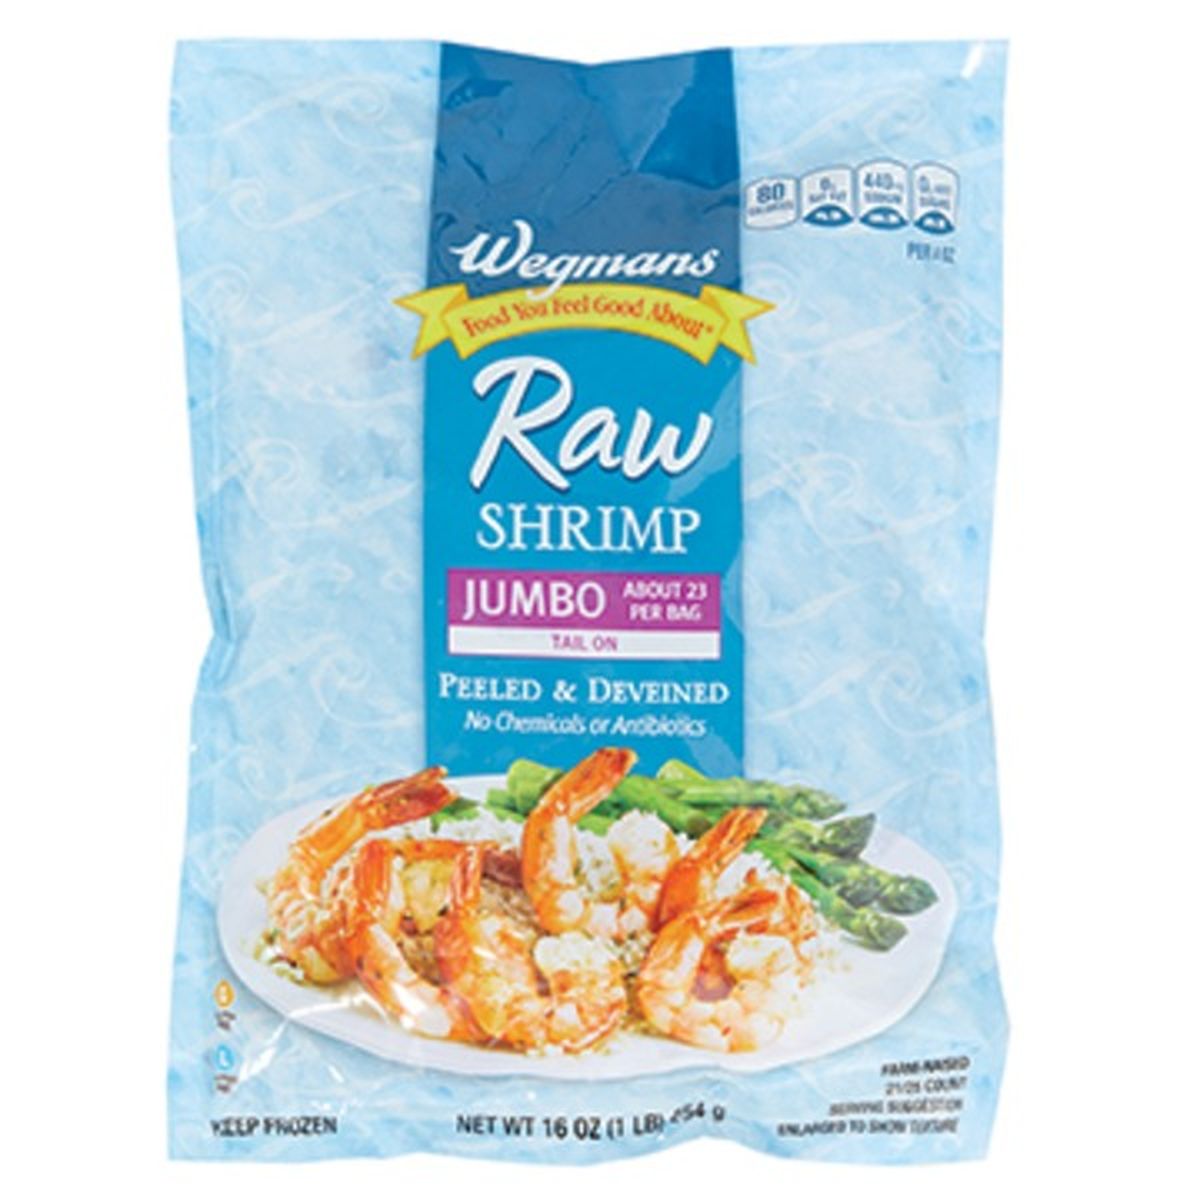 Calories in Wegmans Jumbo Raw  Shrimp, 21-25 Count